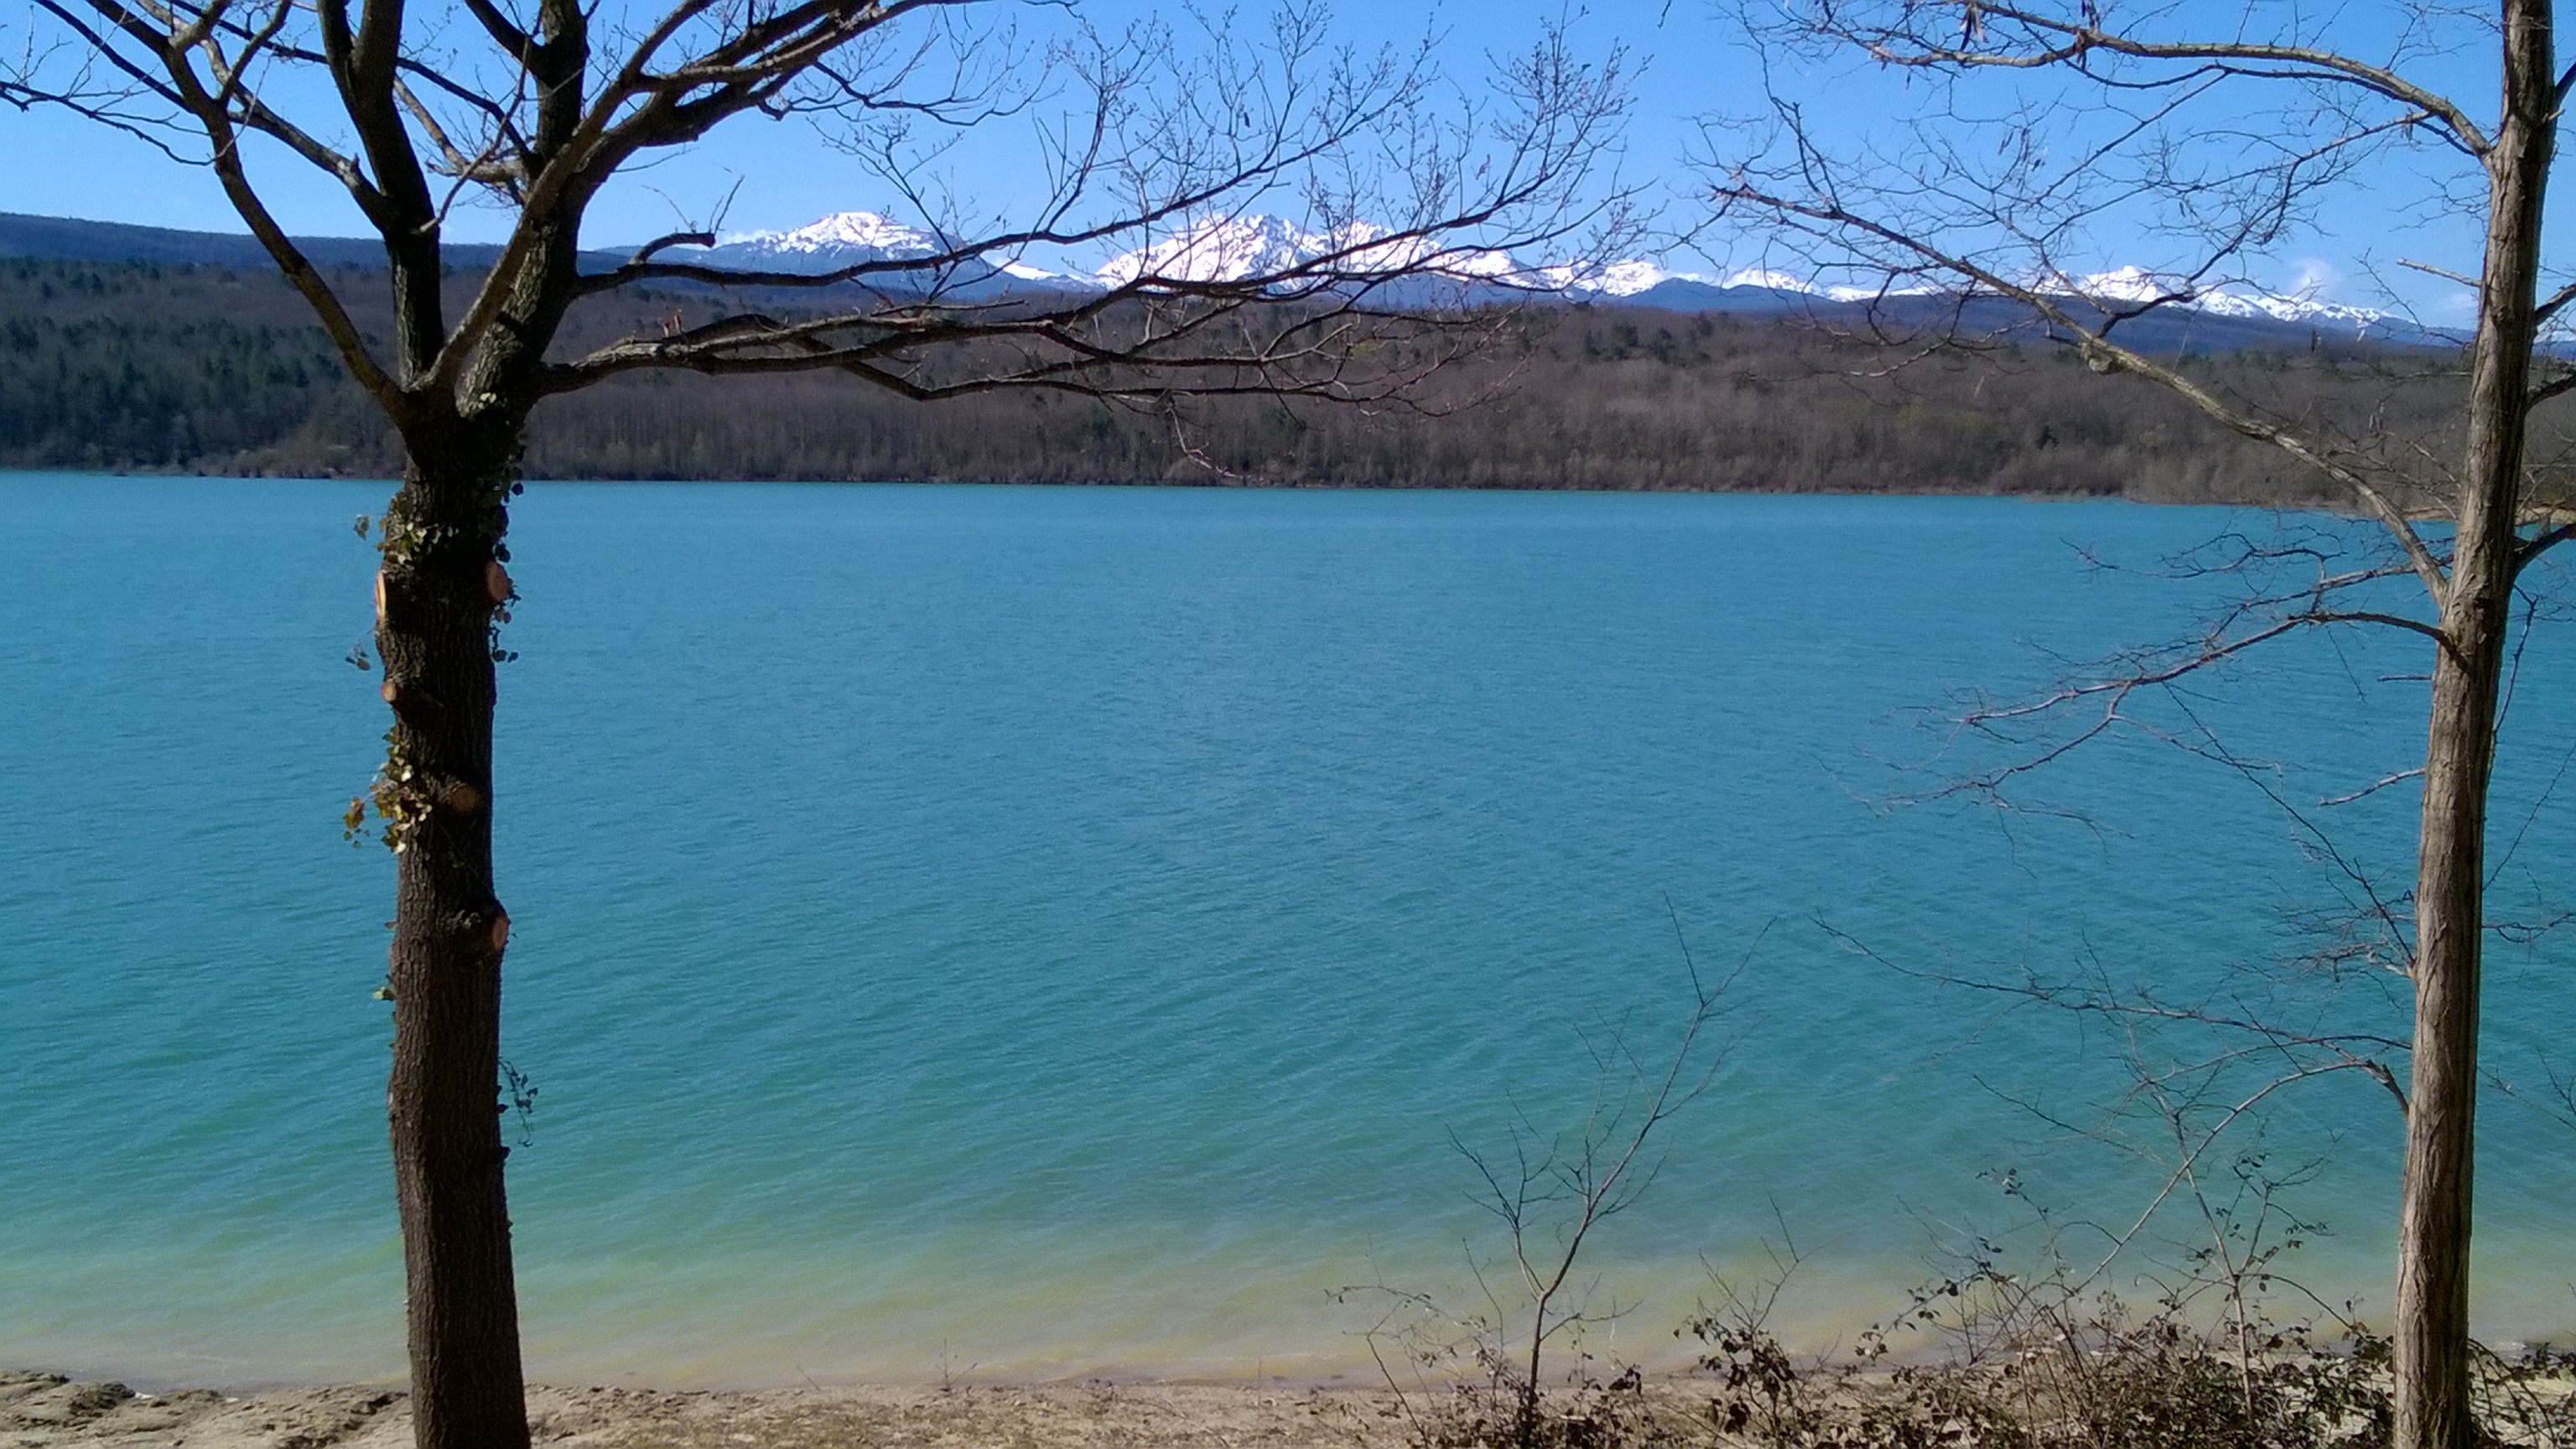 Lac de Montbel in de winter